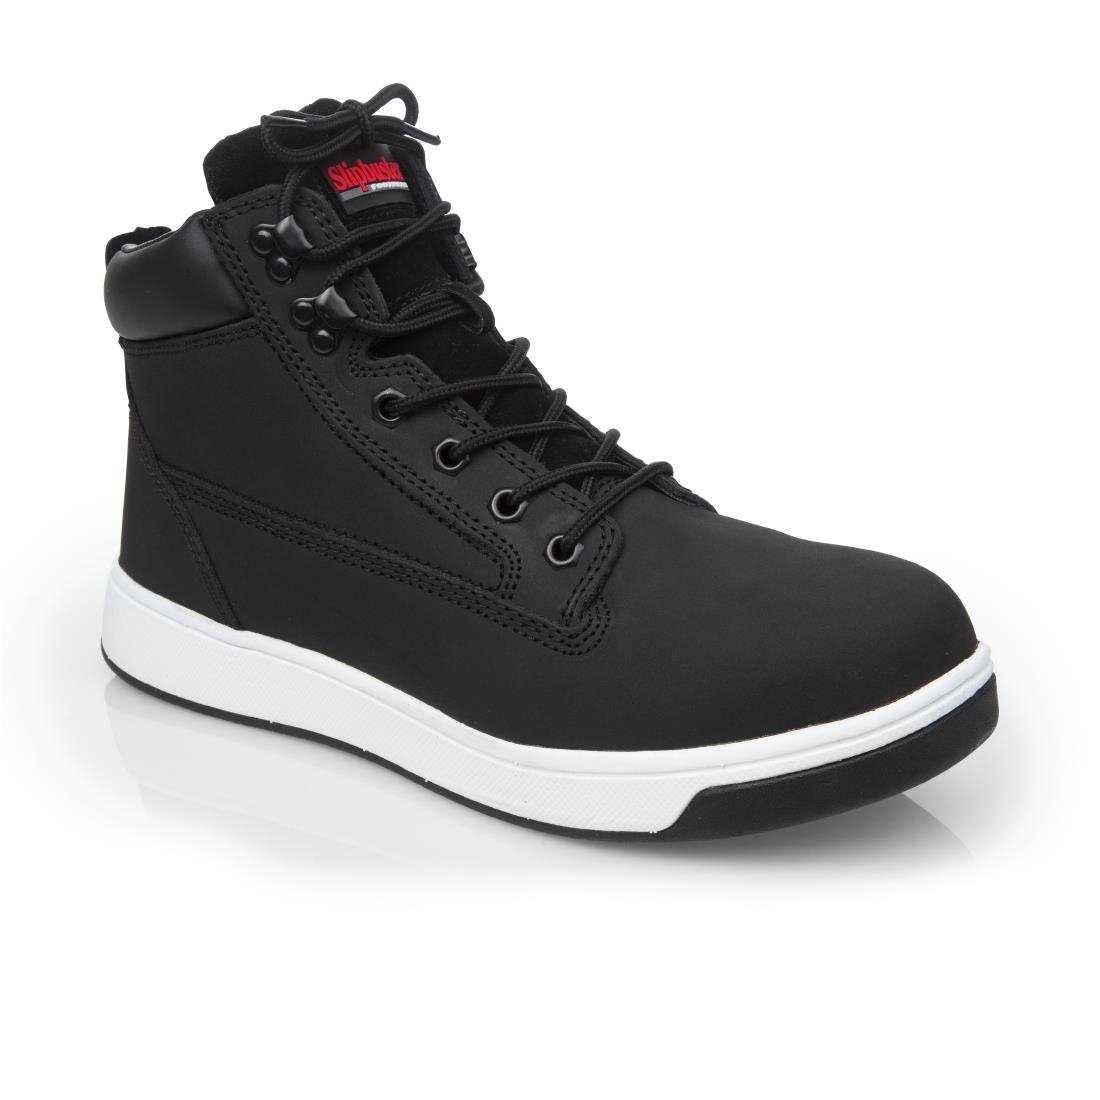 BB422-46 Slipbuster Sneaker Boots Black 46 JD Catering Equipment Solutions Ltd